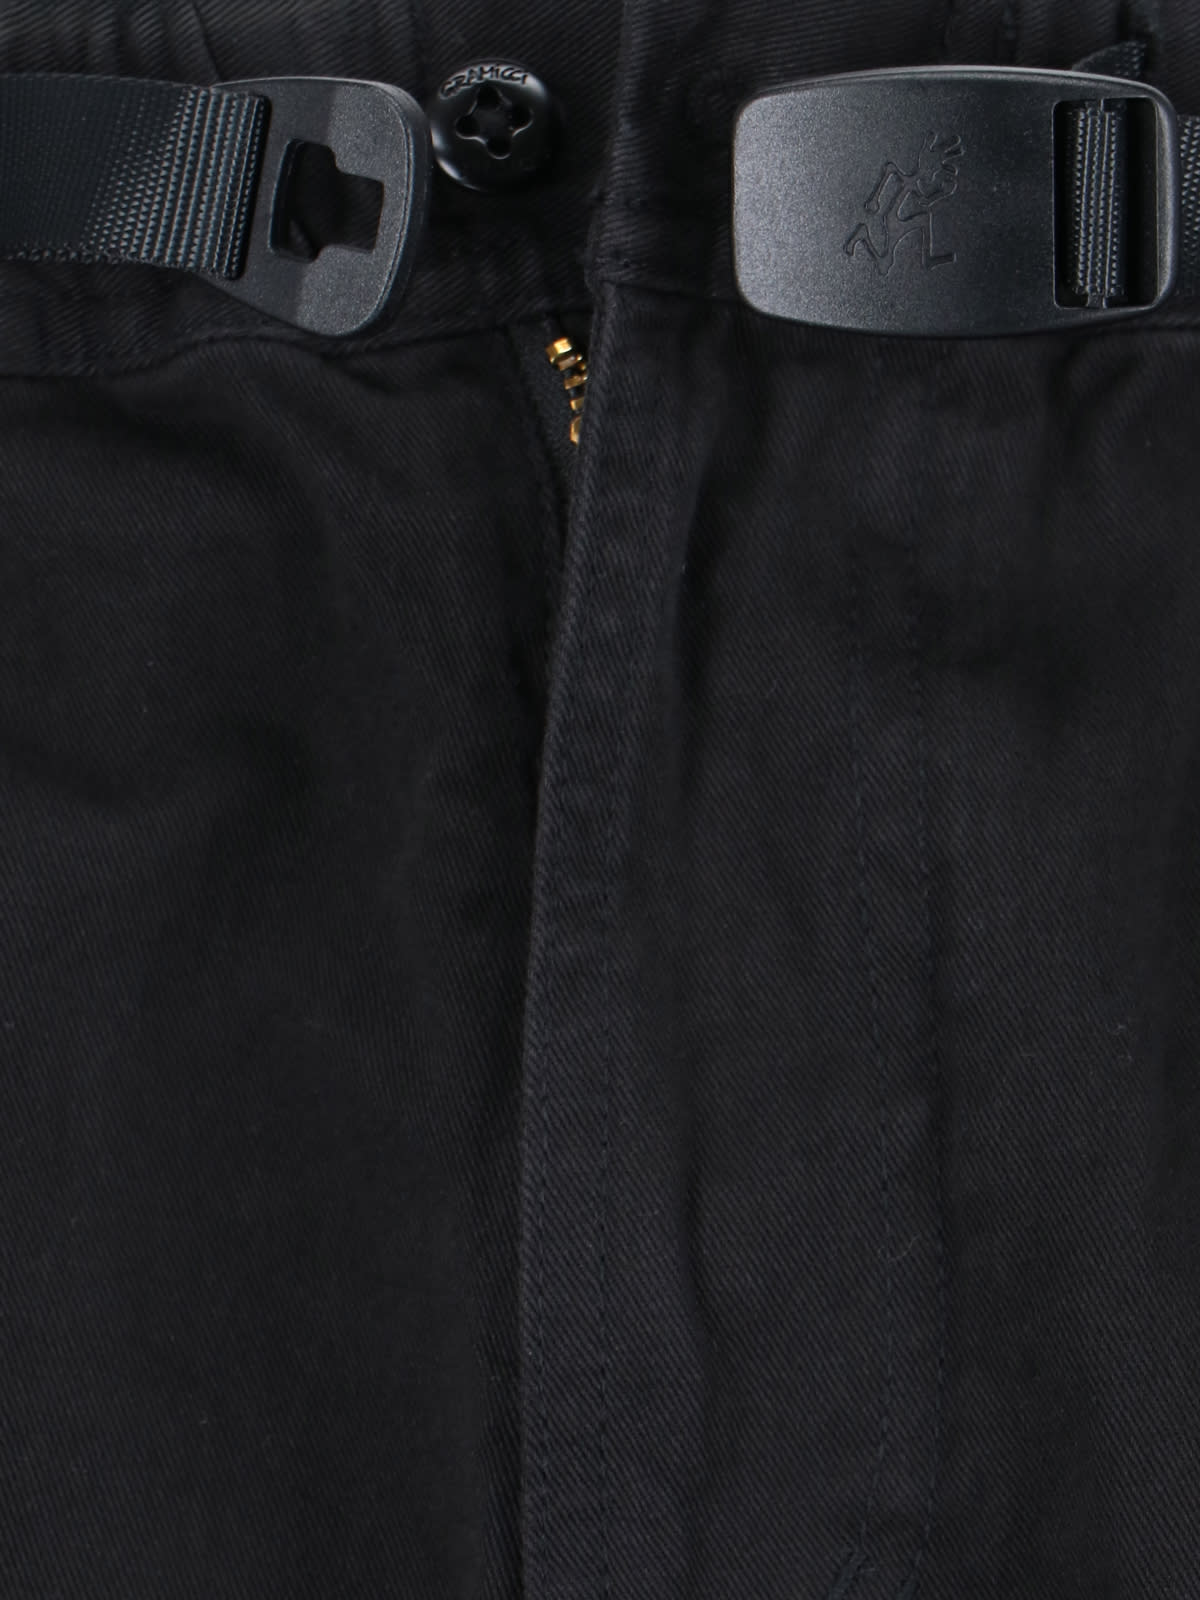 Shop Gramicci Gadget Shorts In Black